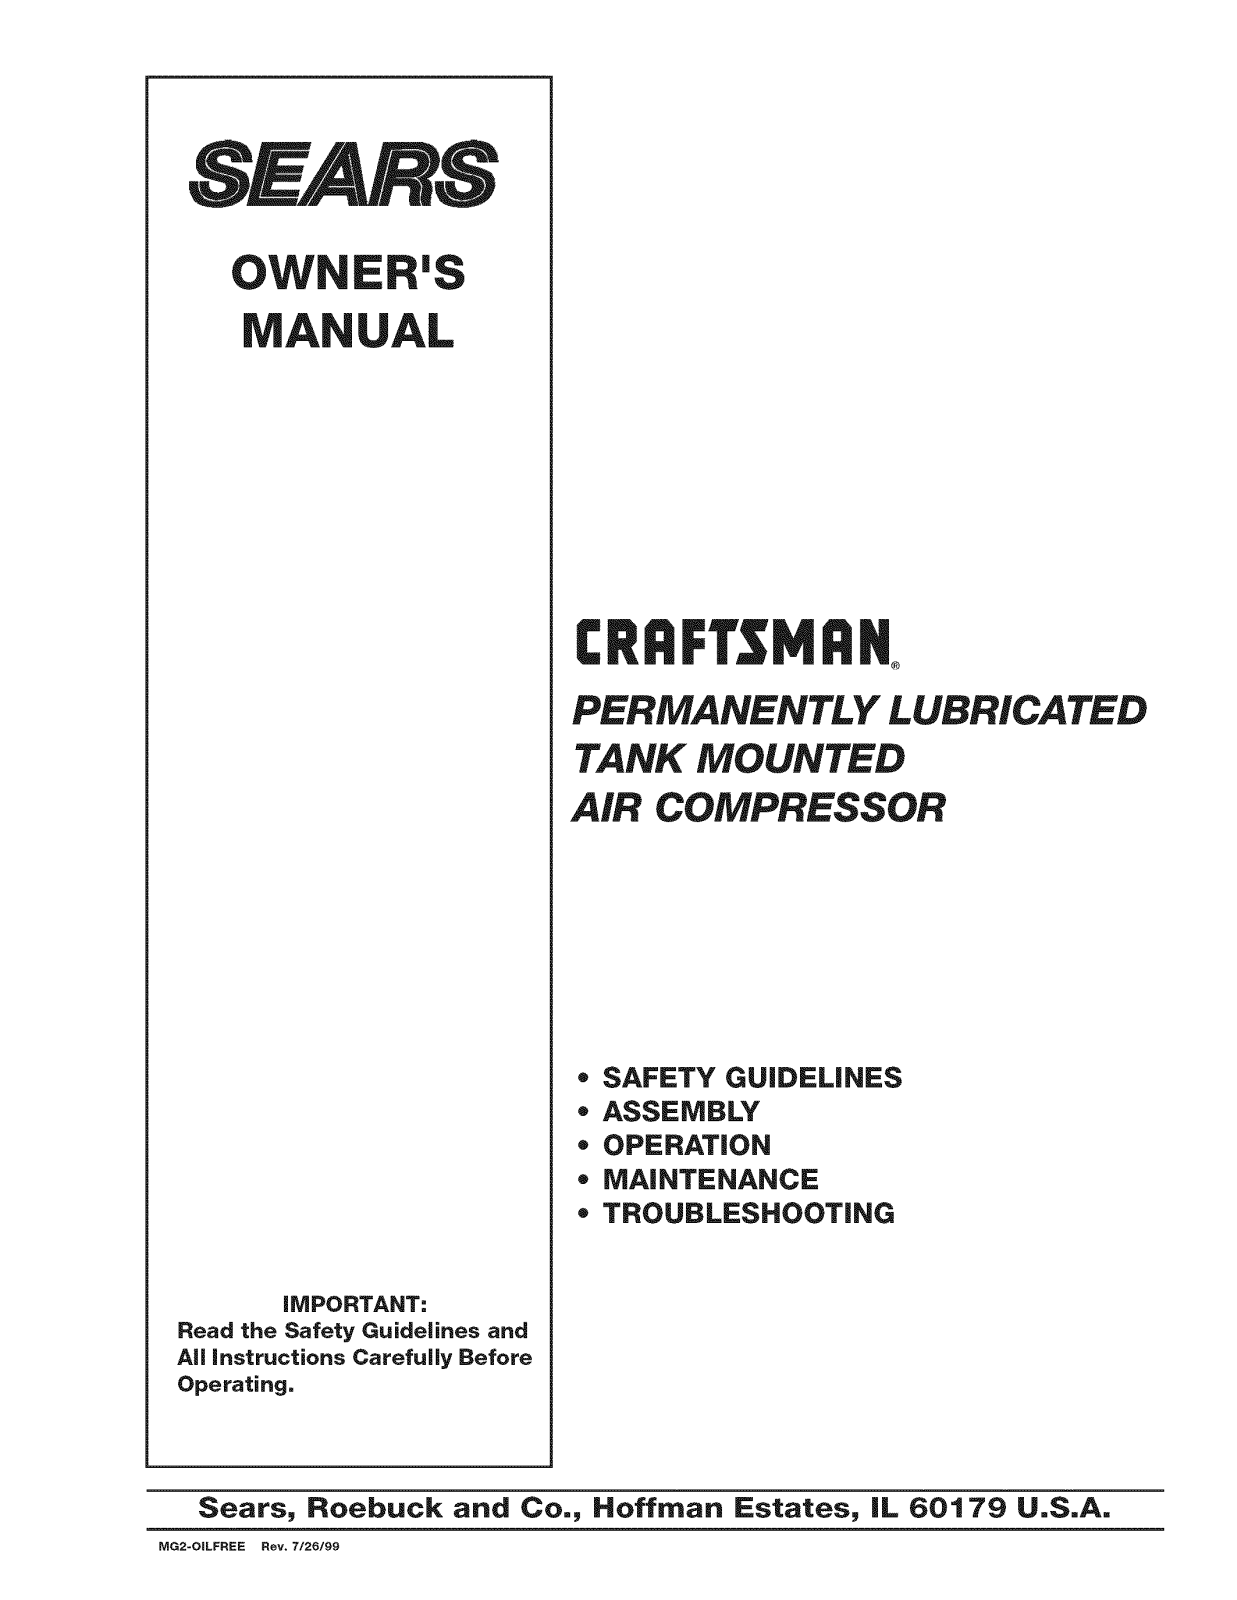 Craftsman 919165310, 919186430, 919167330, 919167200, 919165500 Owner’s Manual